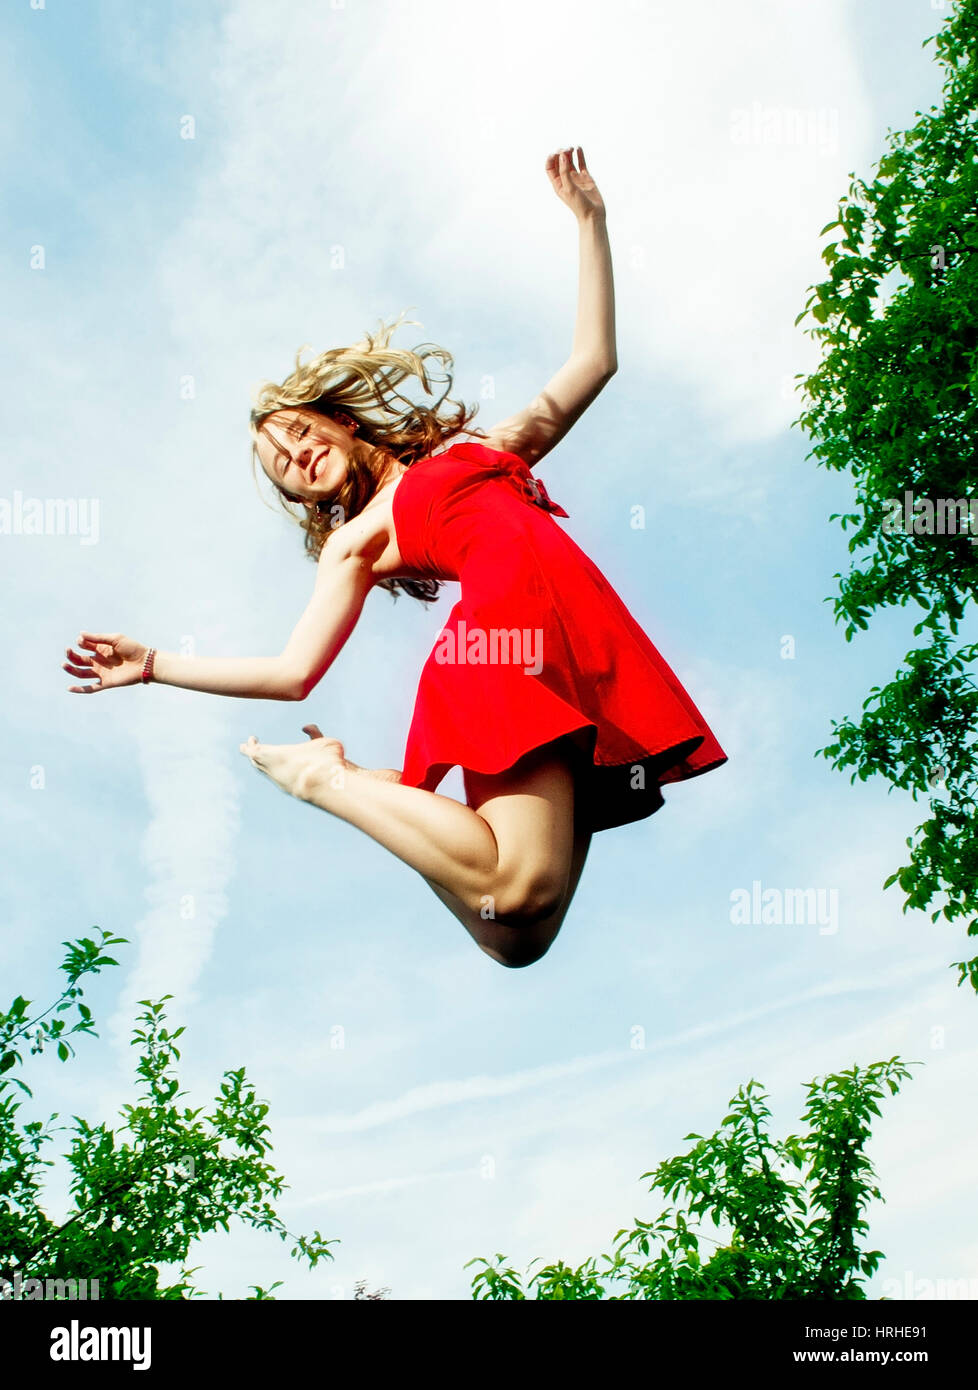 springendes Maedchen - jumping girl Stock Photo